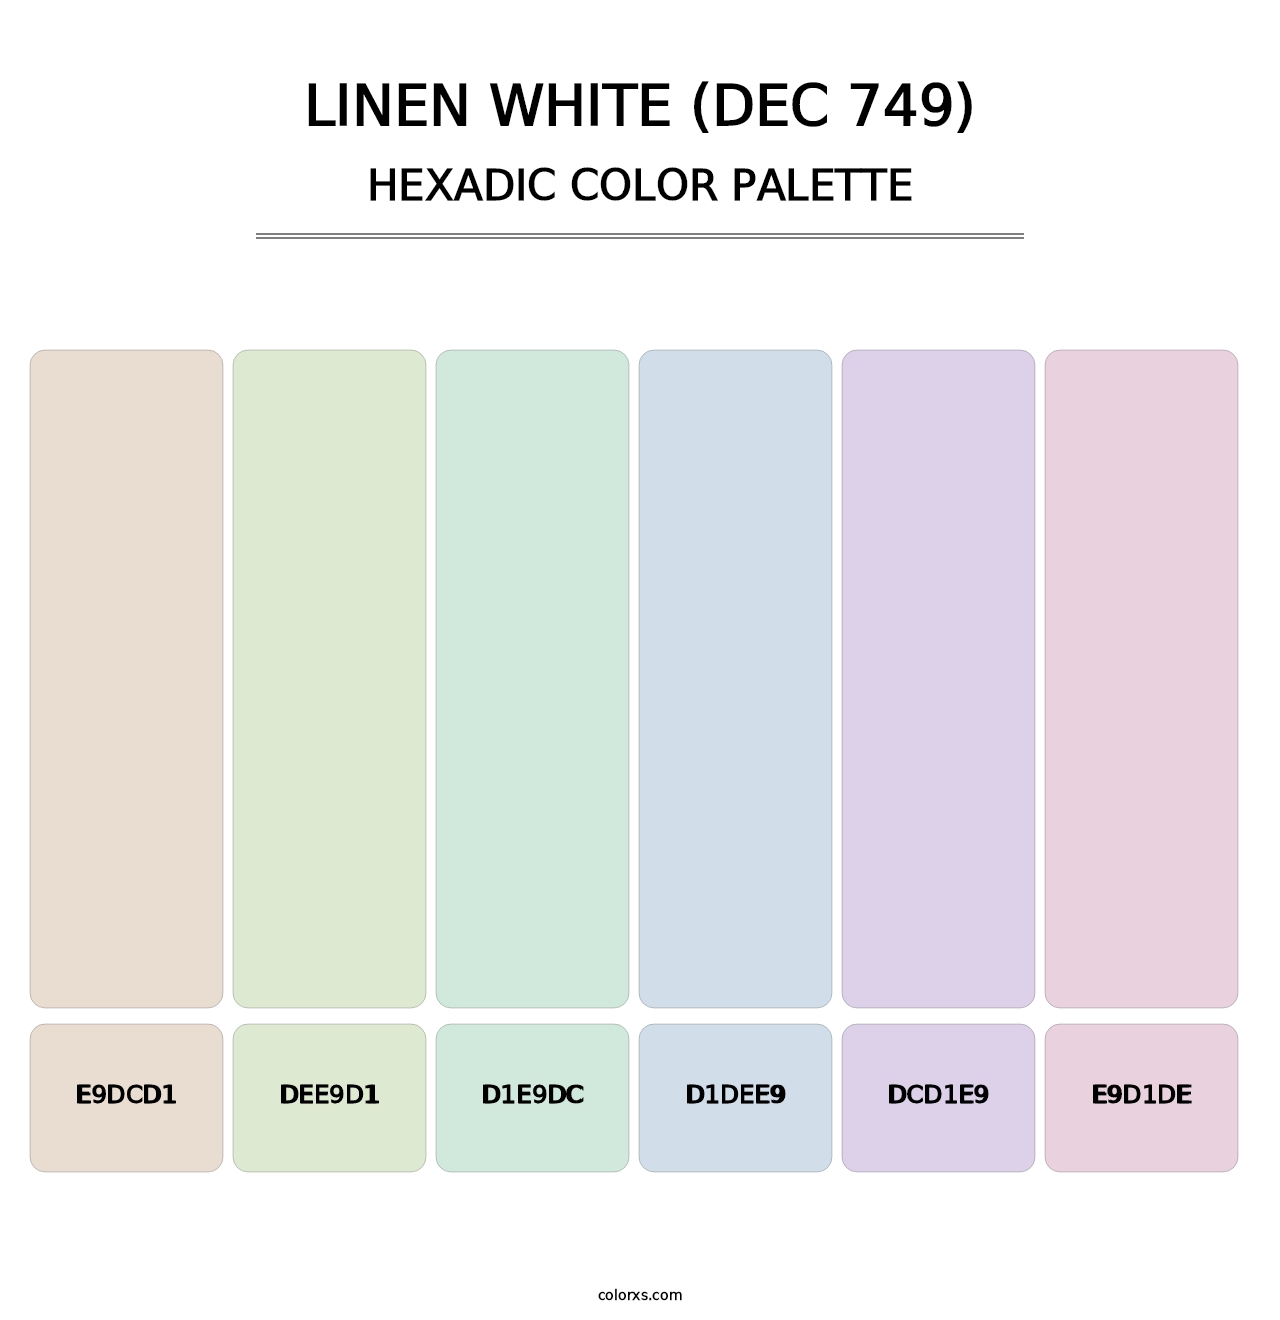 Linen White (DEC 749) - Hexadic Color Palette